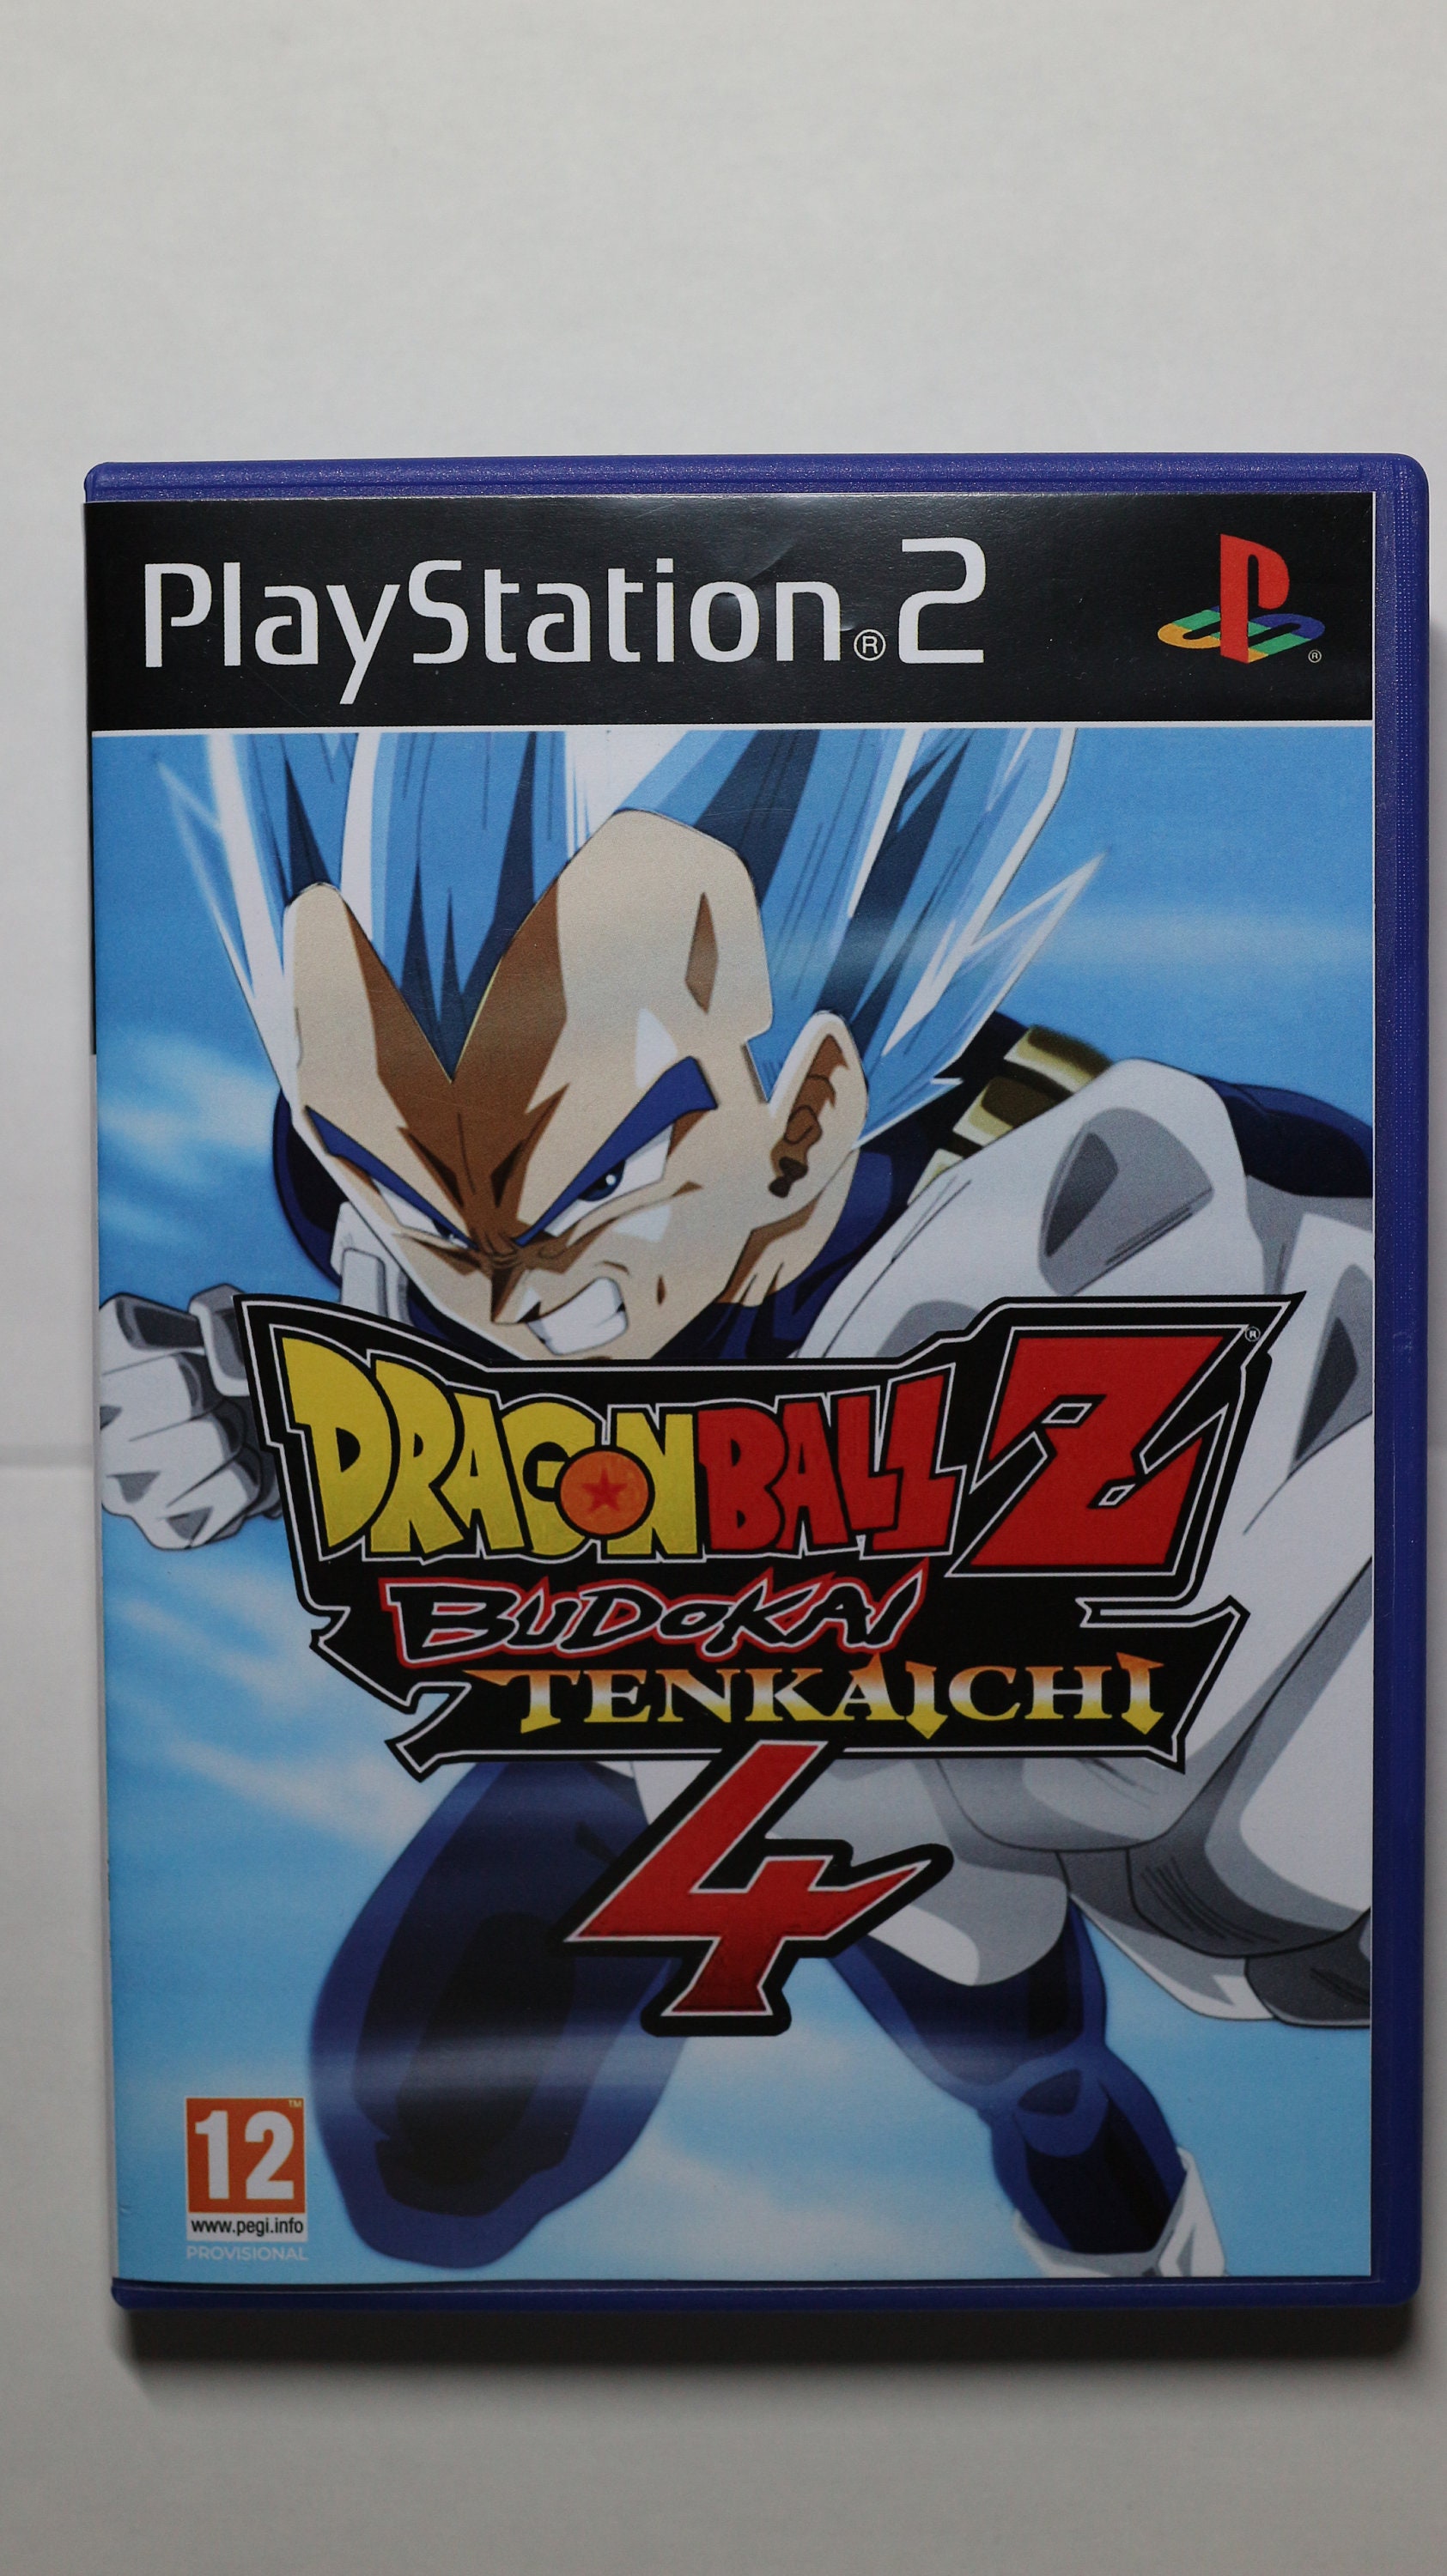 Dragon ball z budokai tenkaichi 3 mod playstation 2